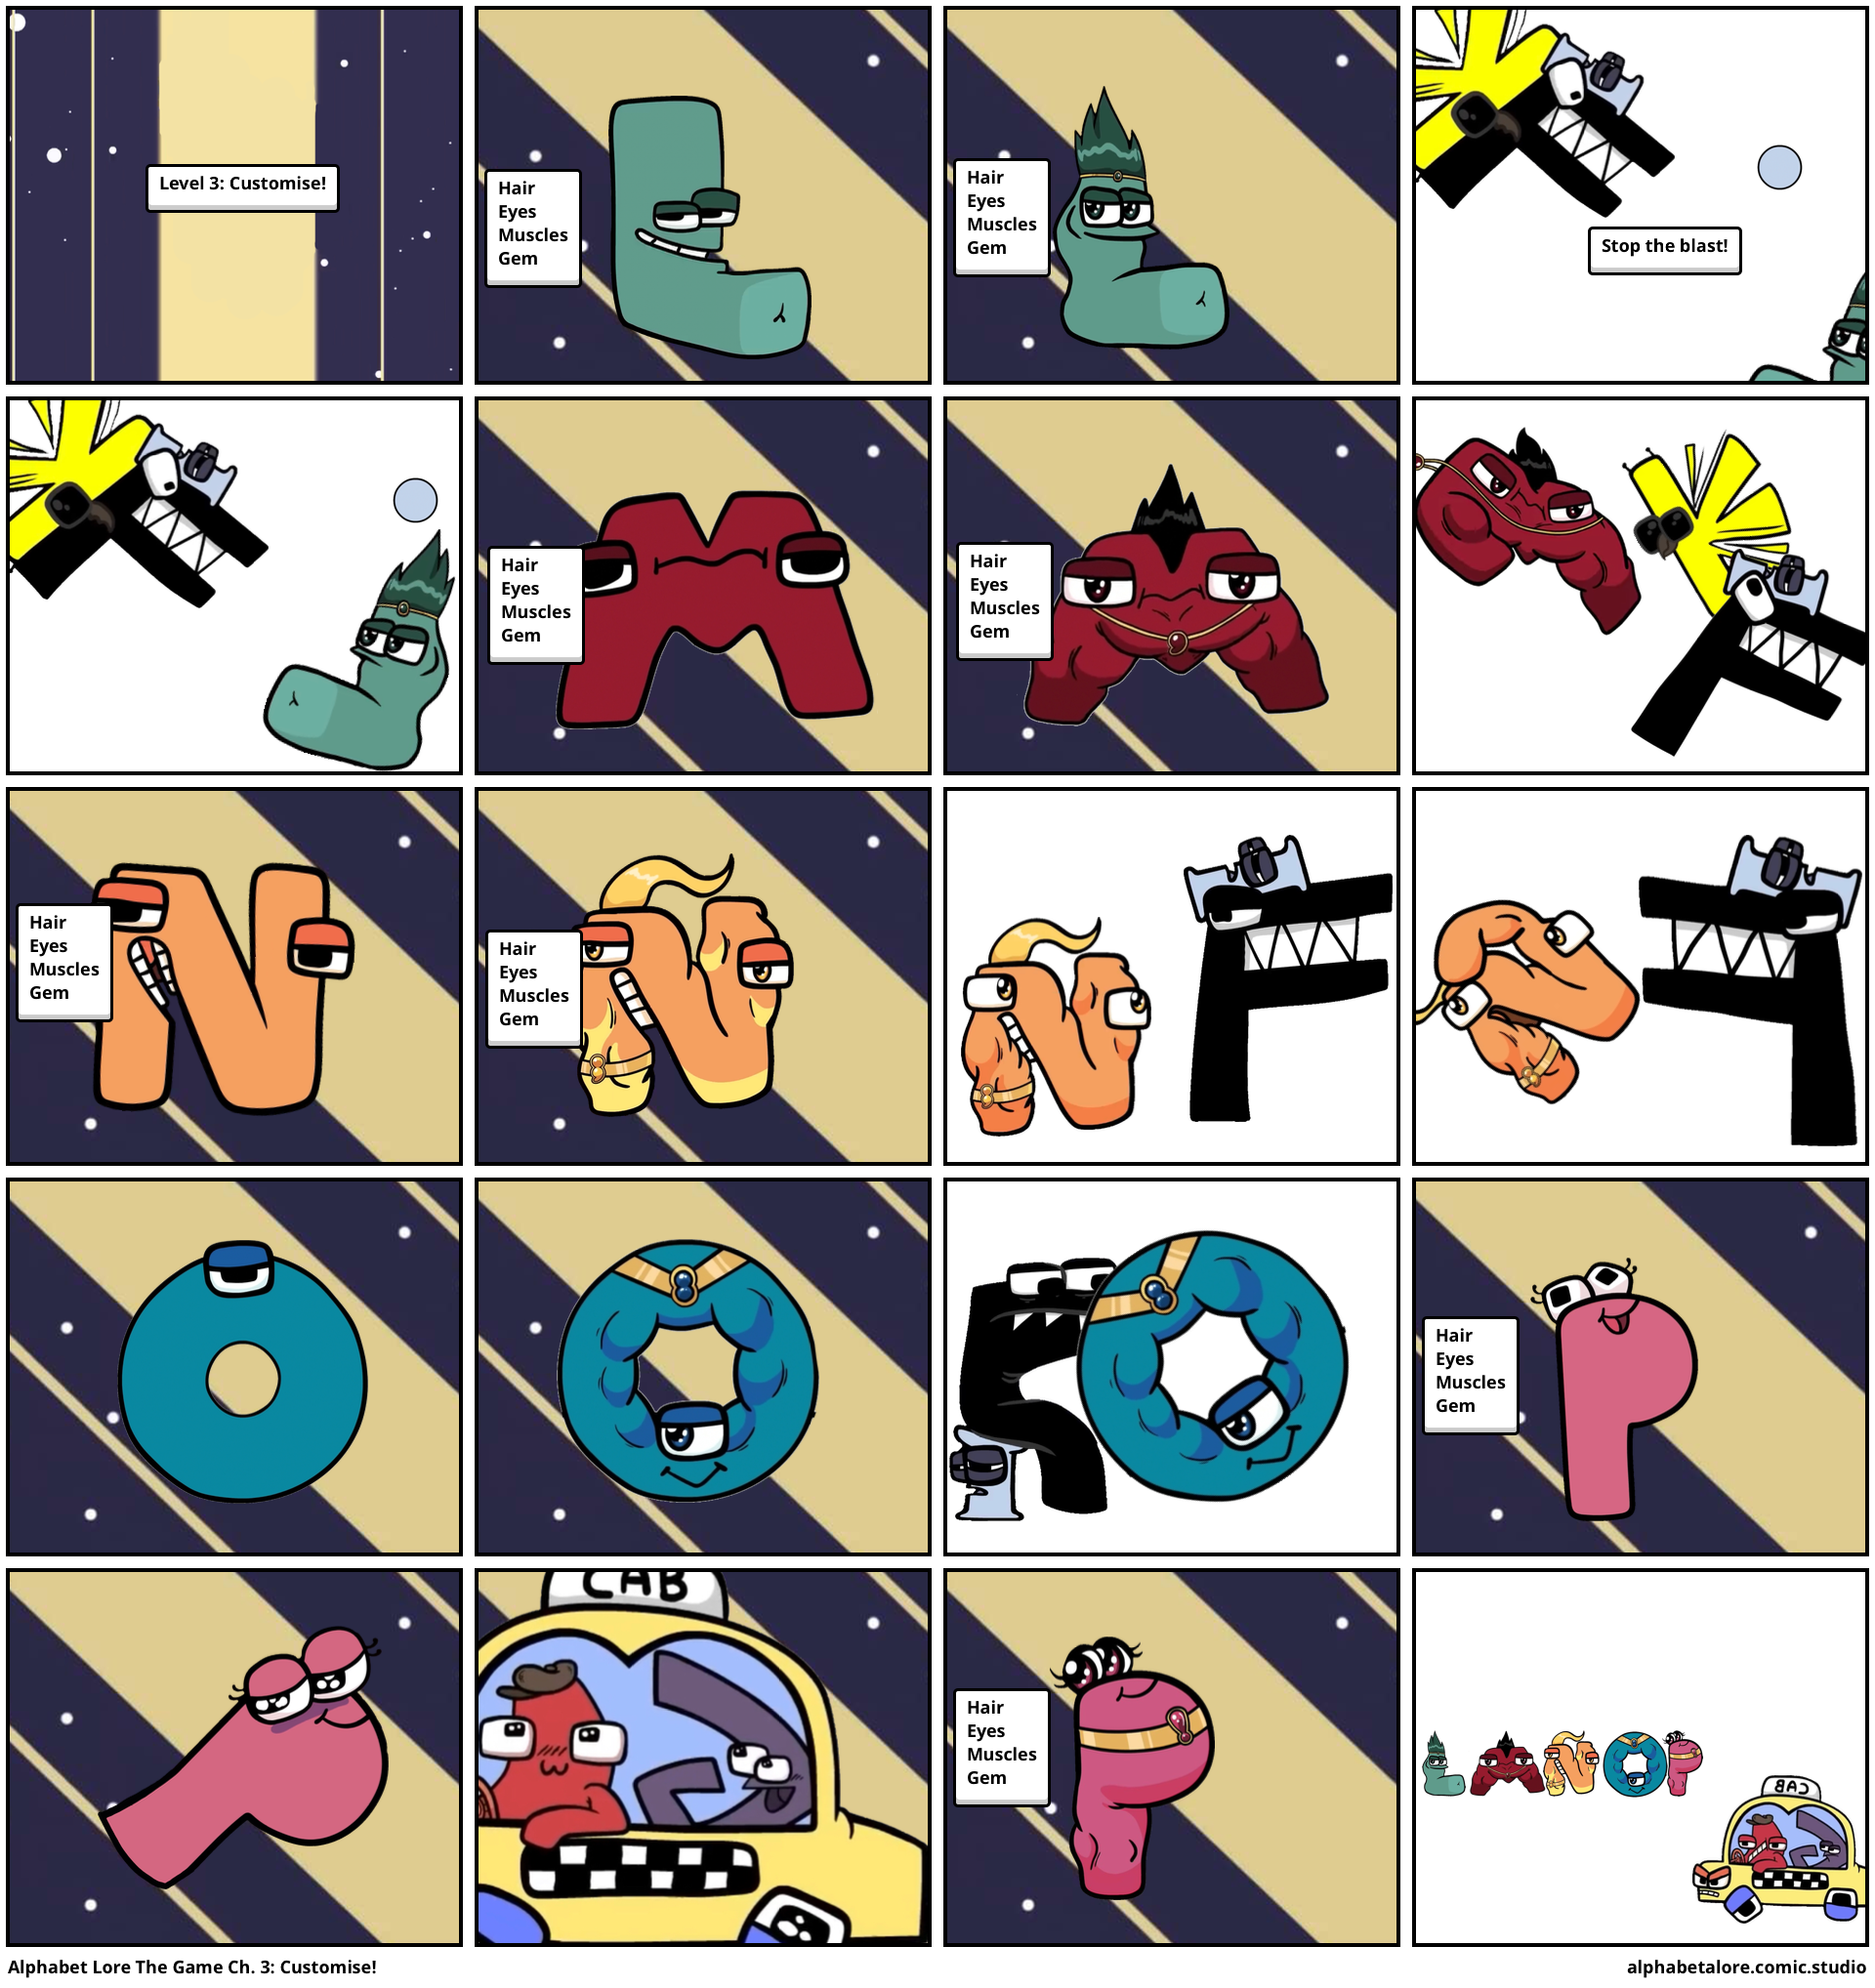 Alphabet Lore The Game Ch. 3: Customise! - Comic Studio